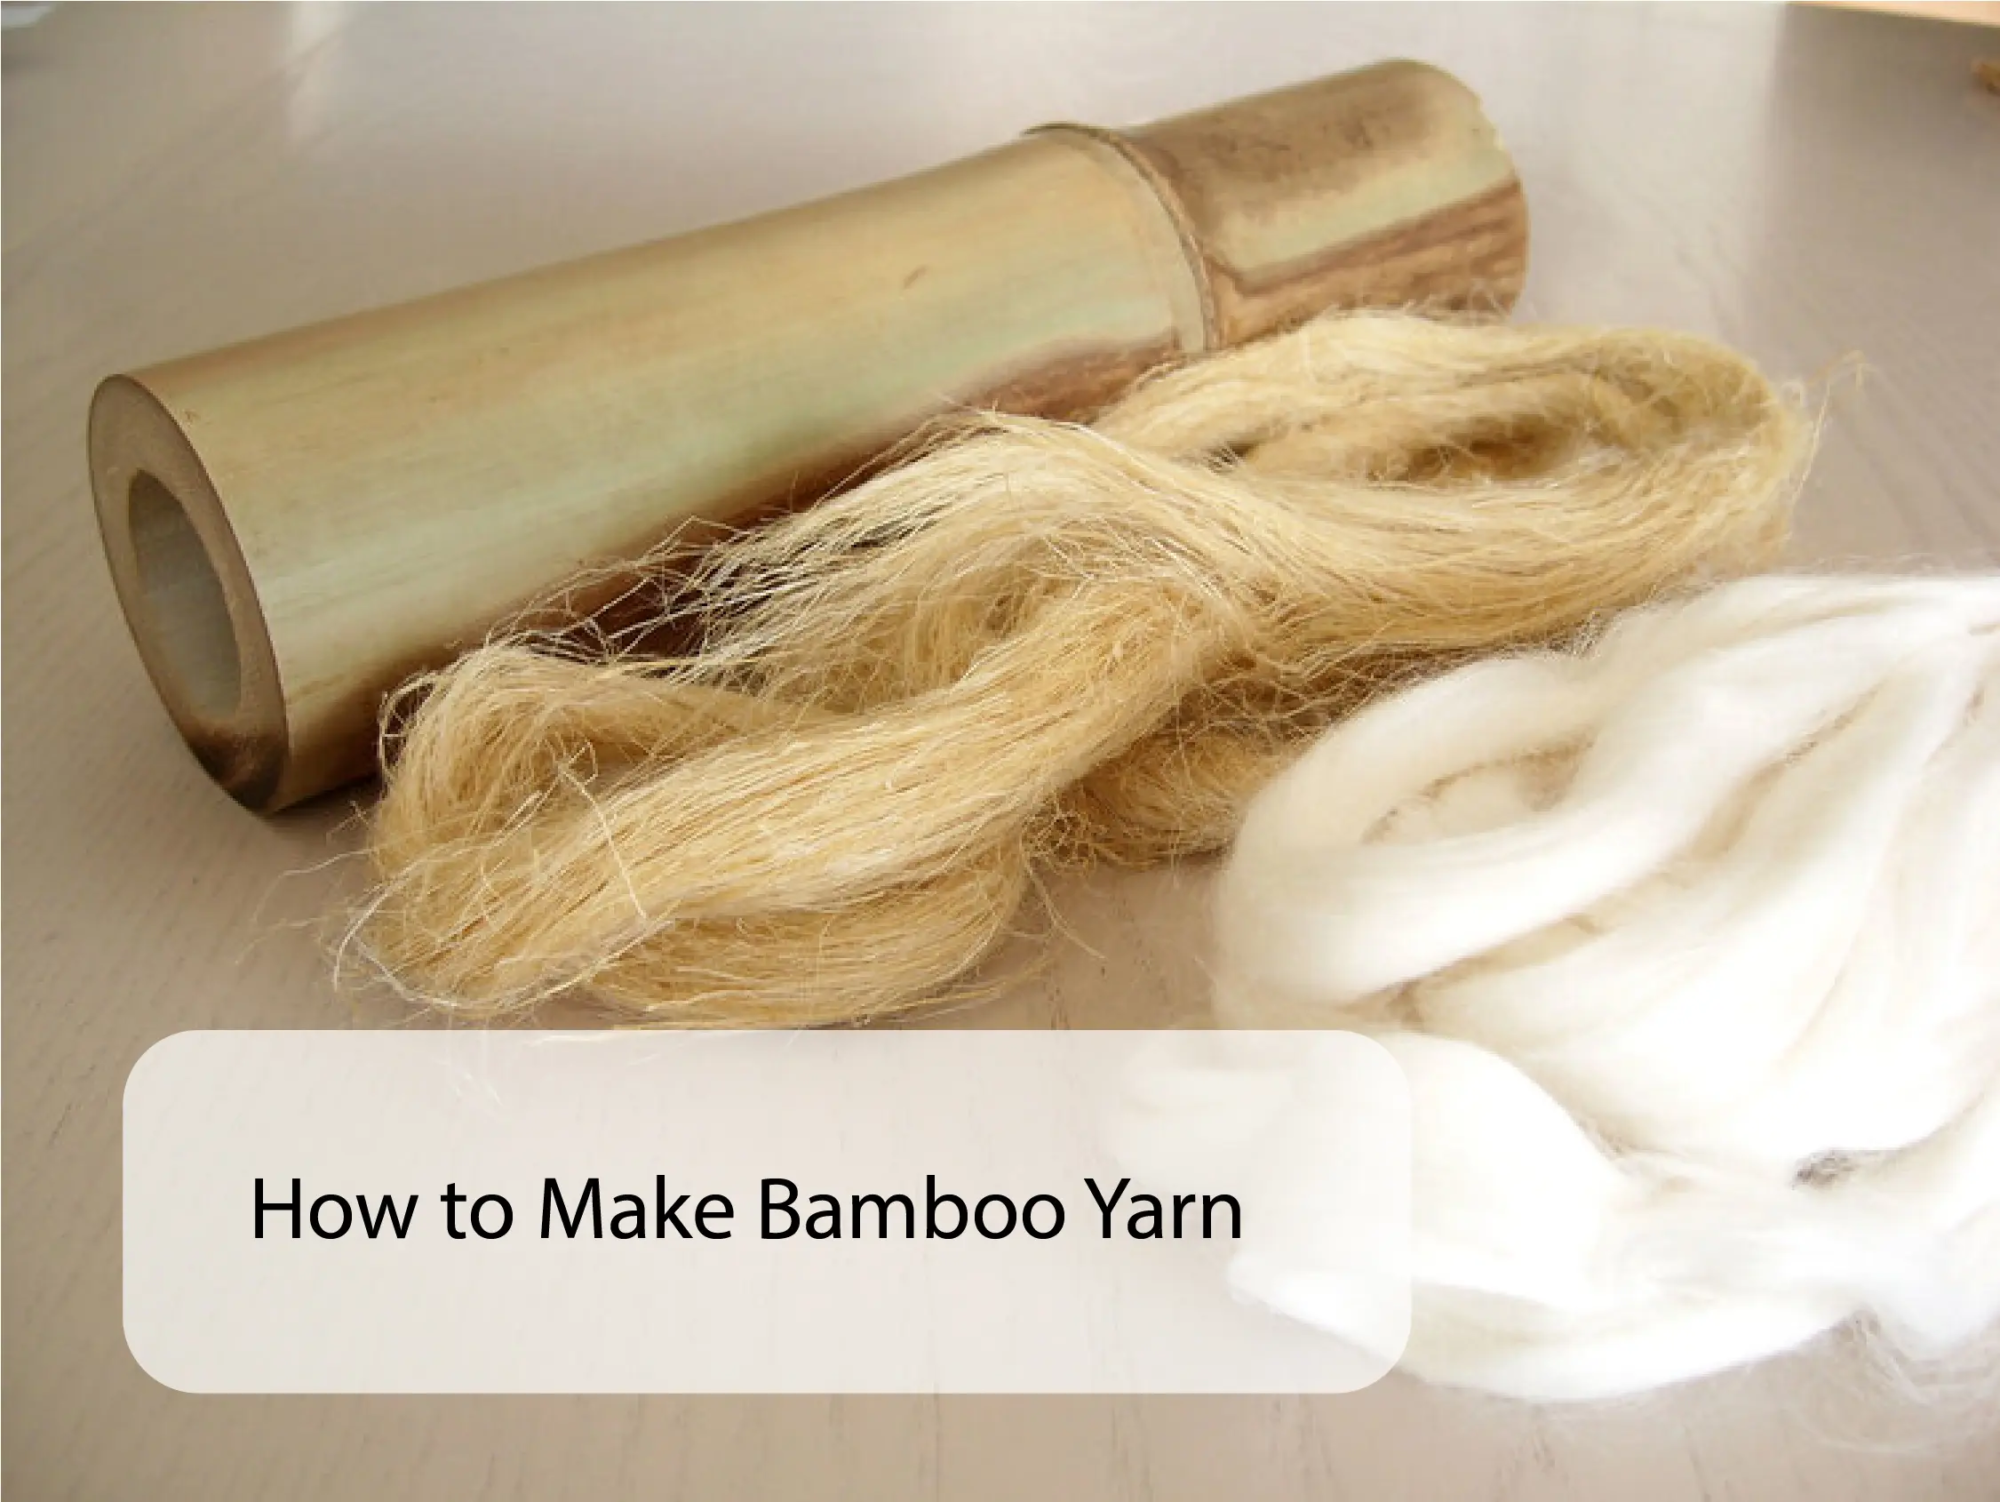 How to Make Bamboo Yarn